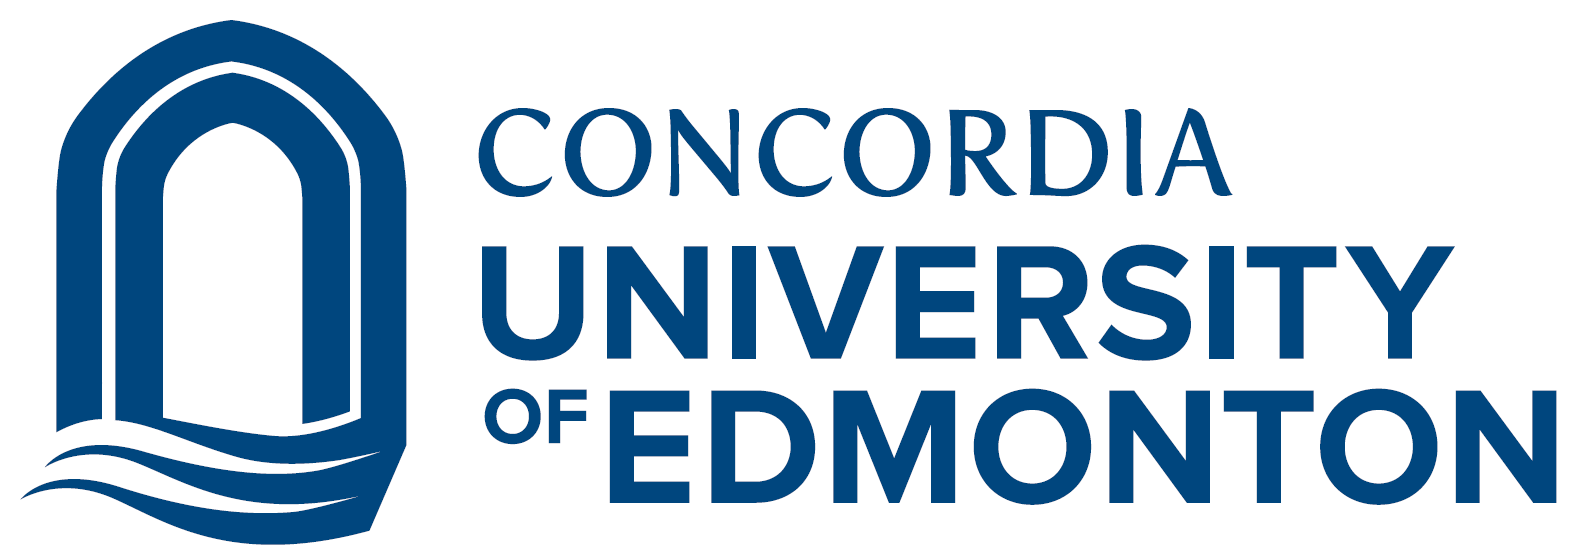 Concordia_University_of_Edmonton_logo_